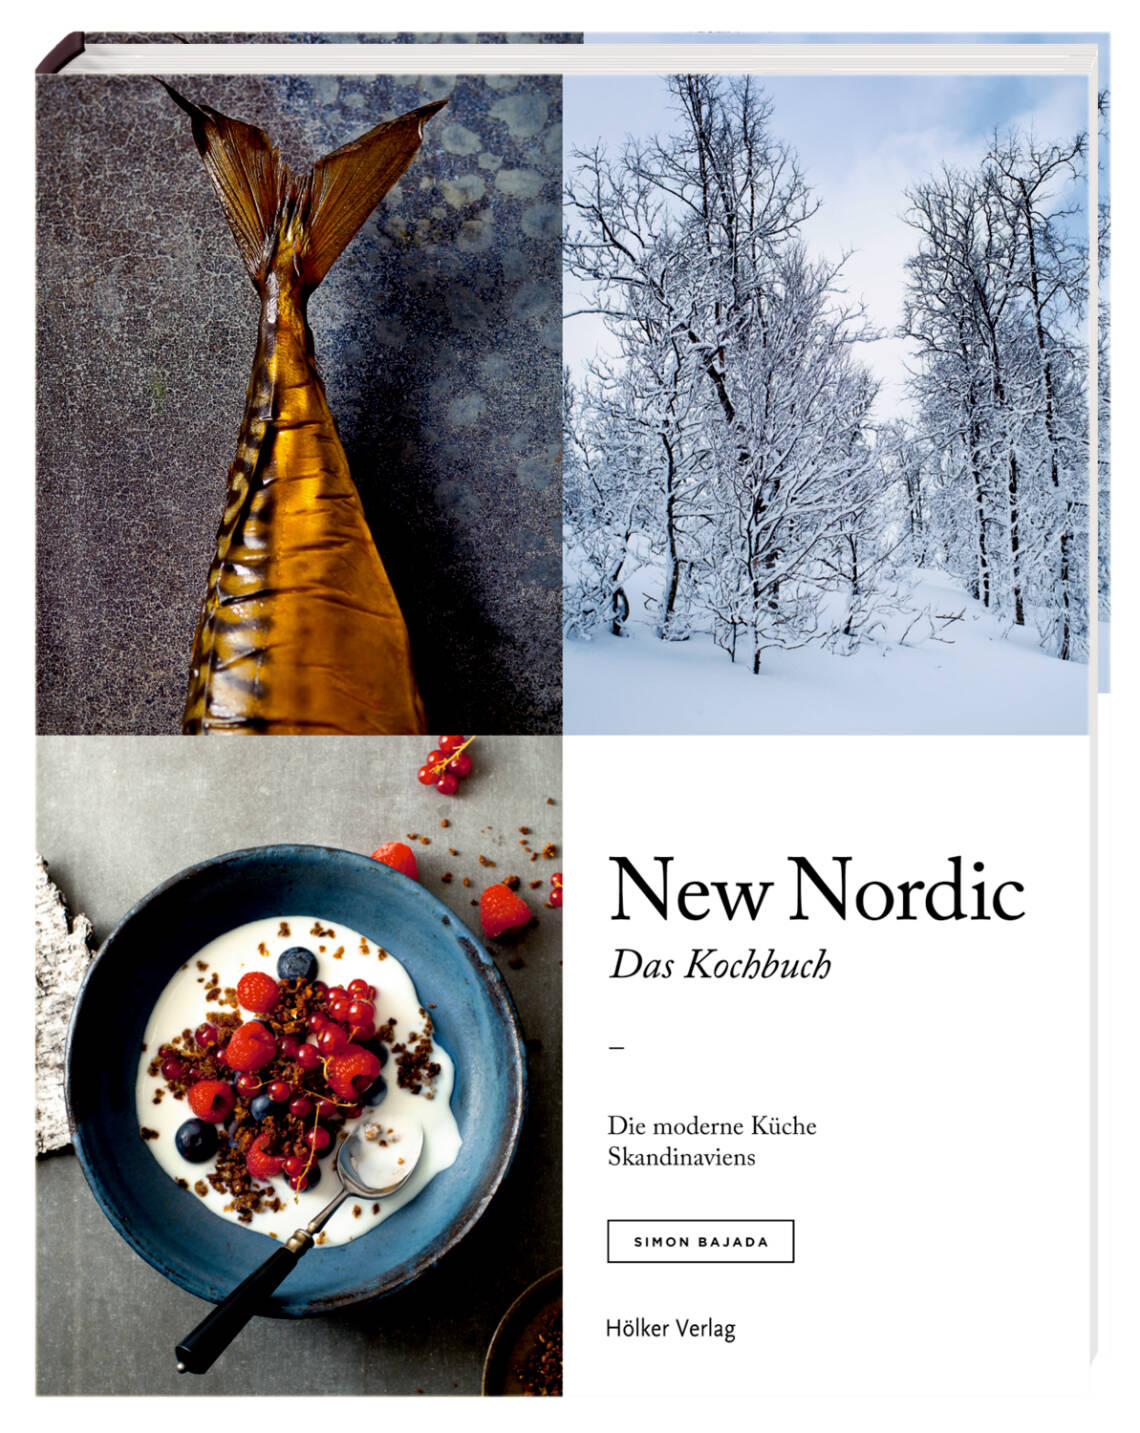 New Nordic von Simon Bajada